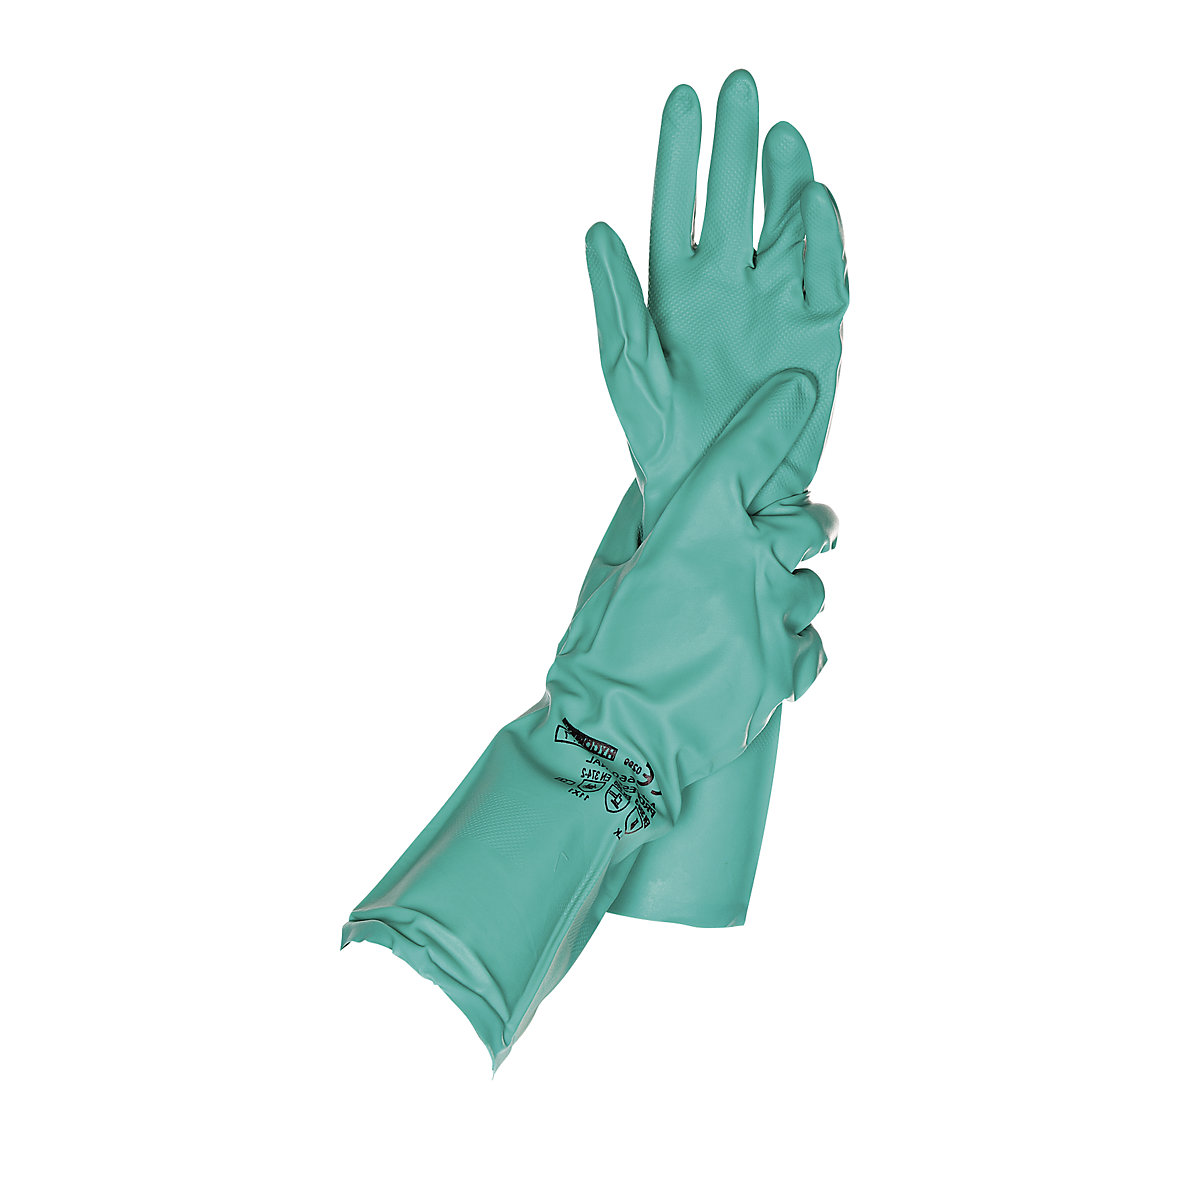 Chemisch beschermende handschoenen PROFESSIONAL